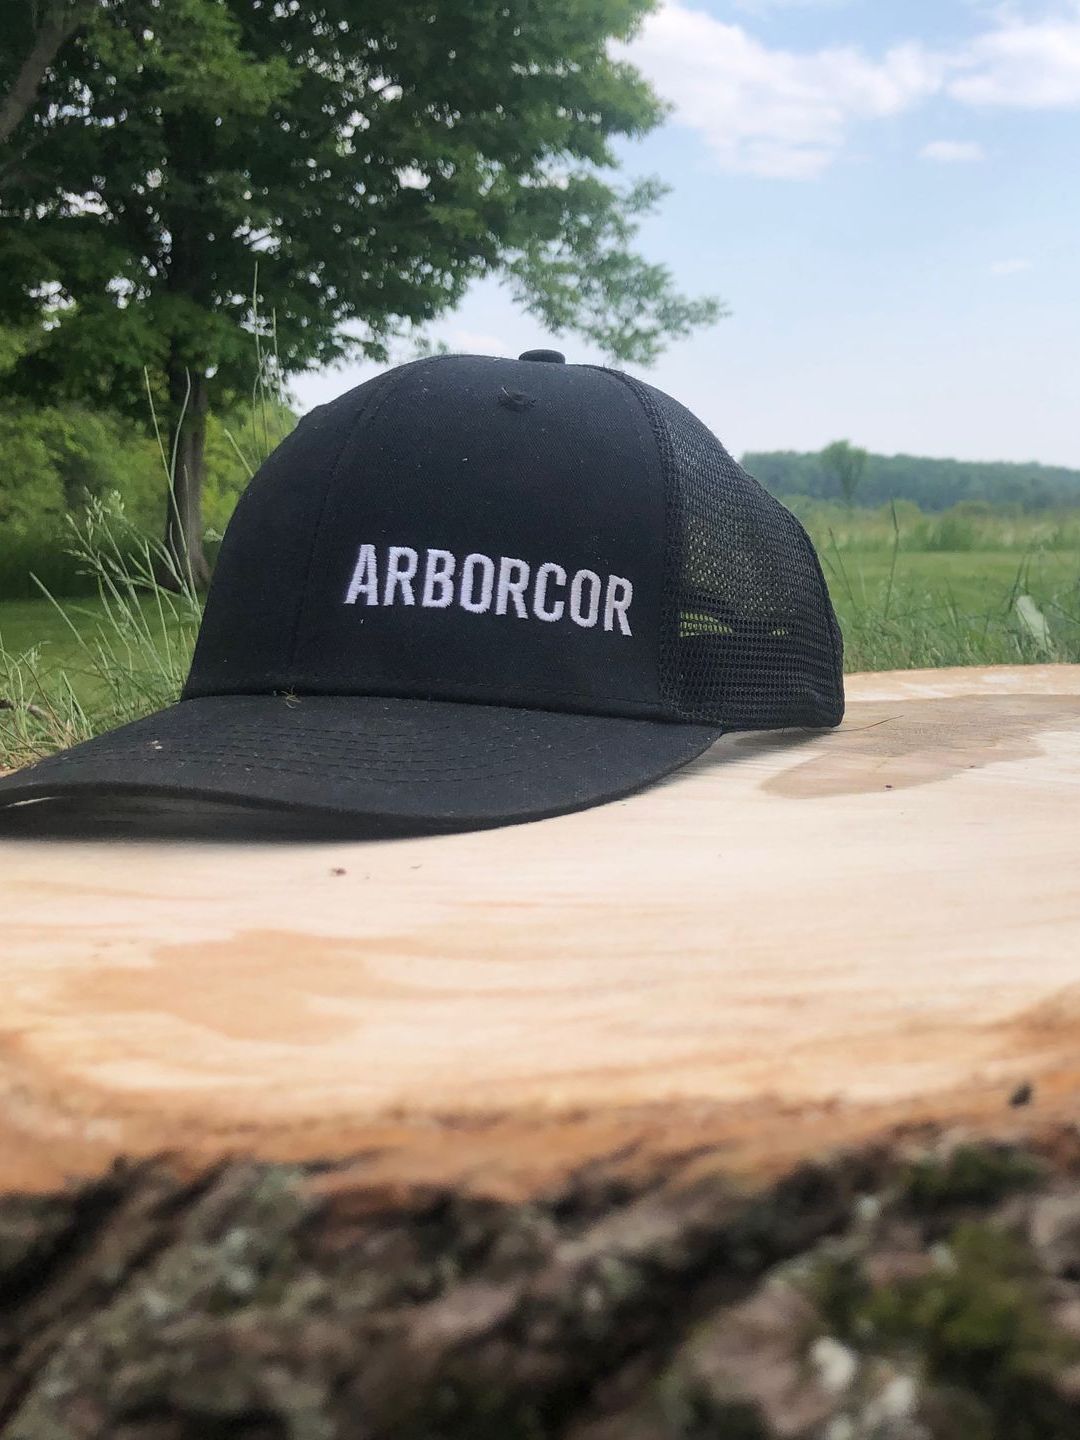 Arborcor provides expert stump removal